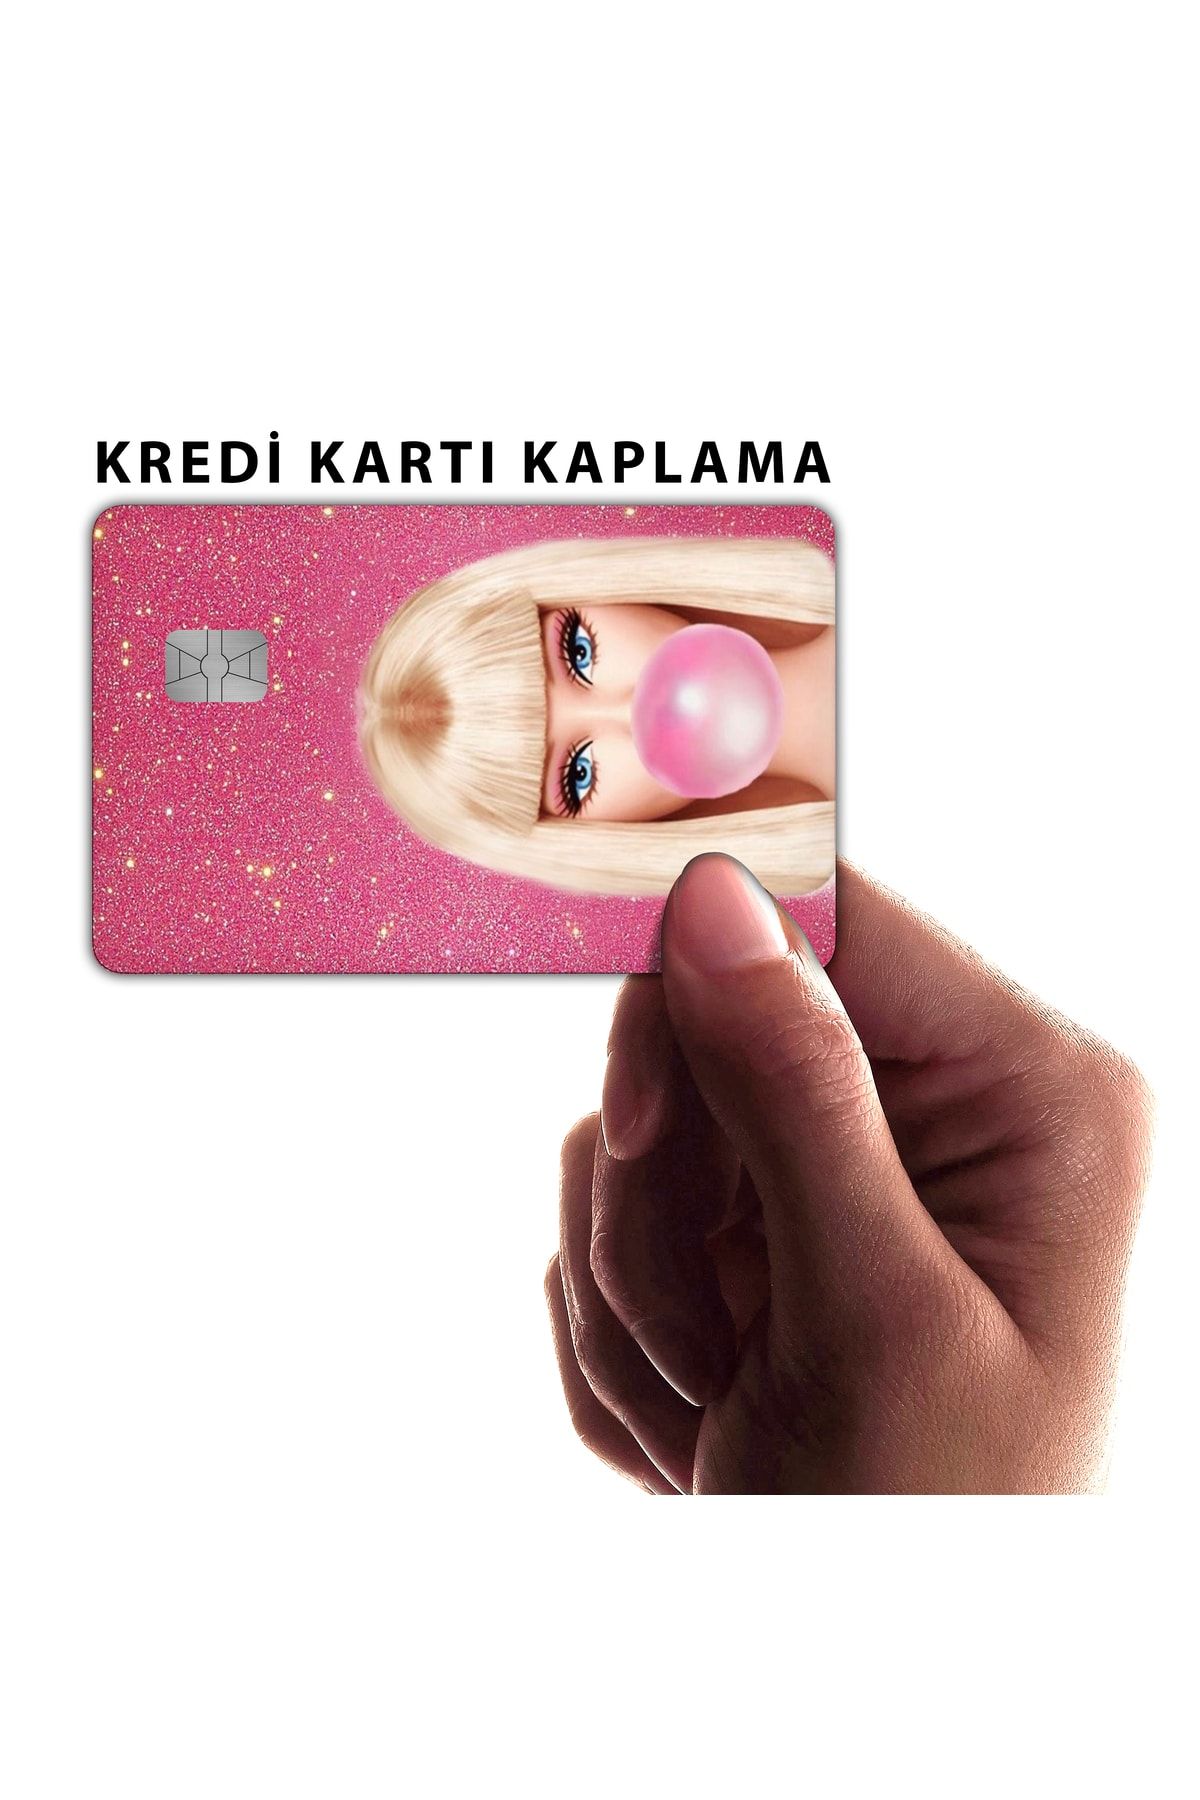 gettsticker Barbie Kredi Kartı Sticker Kaplama 1 Çipli 1çipsiz